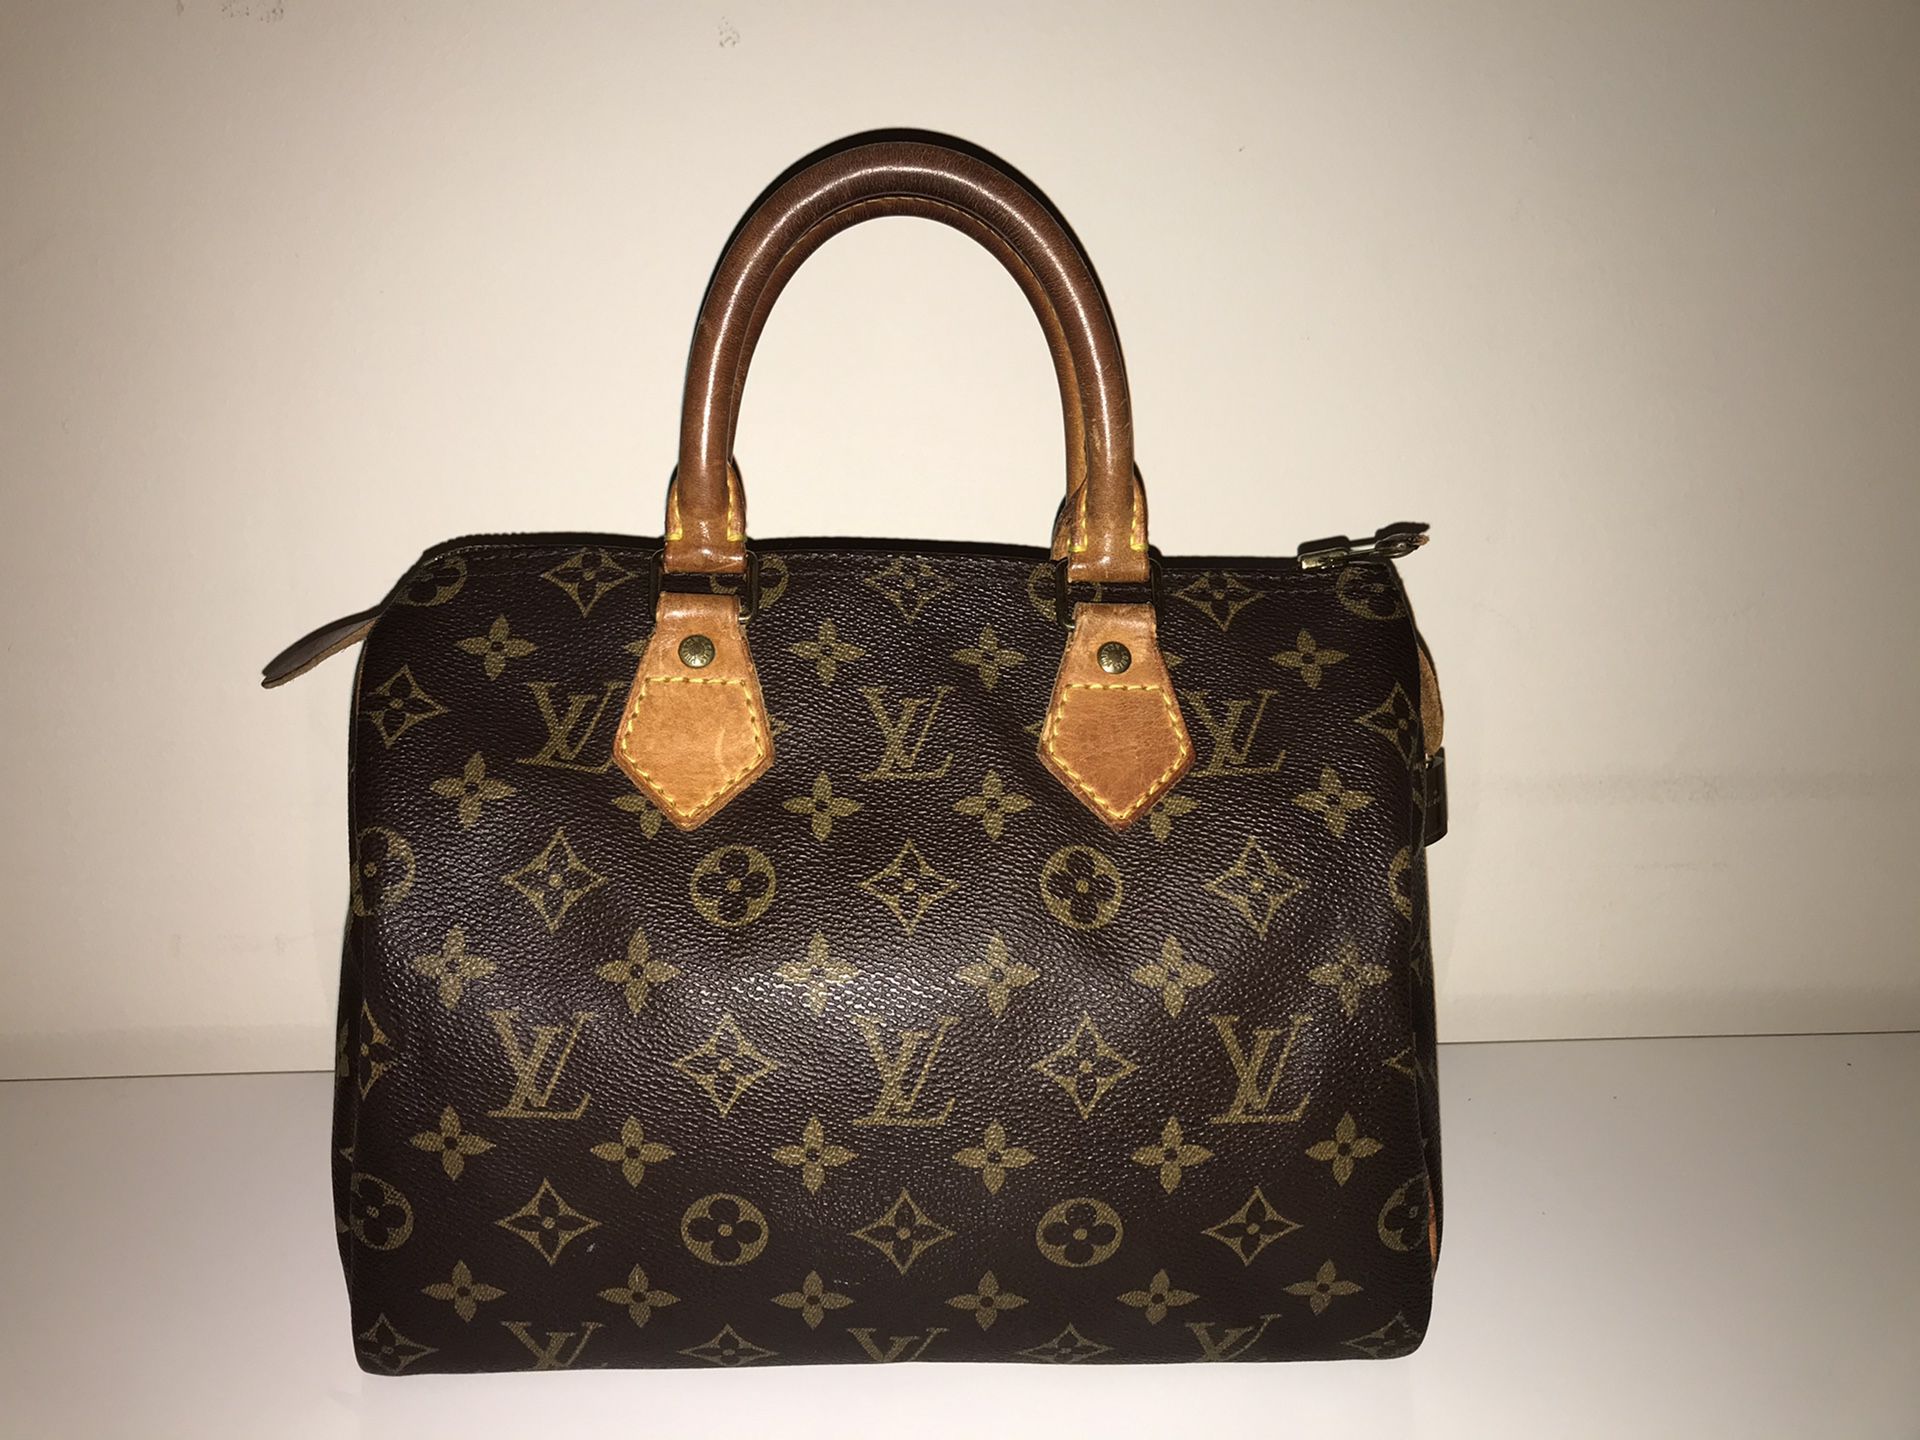 Authentic Louis Vuitton monogram Speedy 25 bag